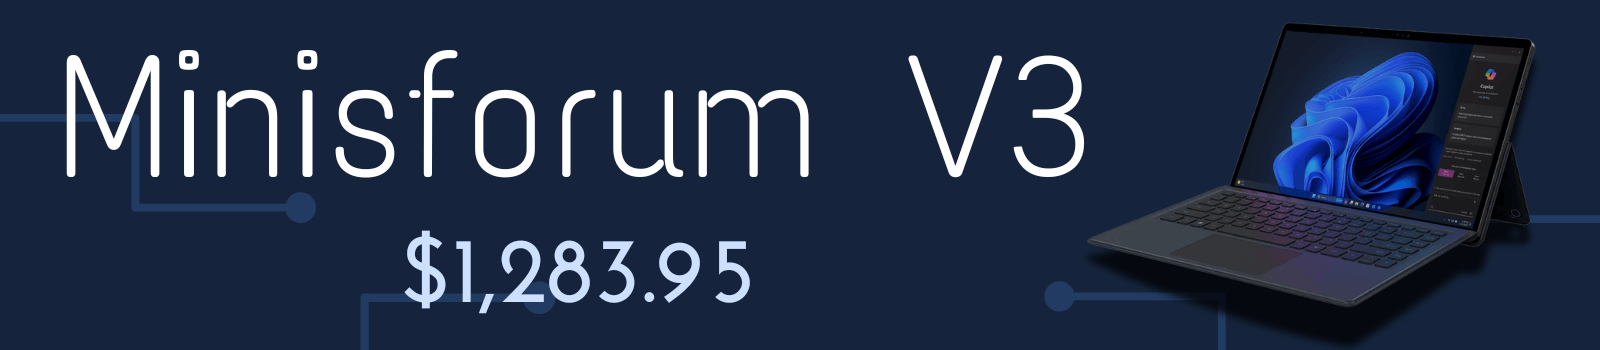 Minisforum V3